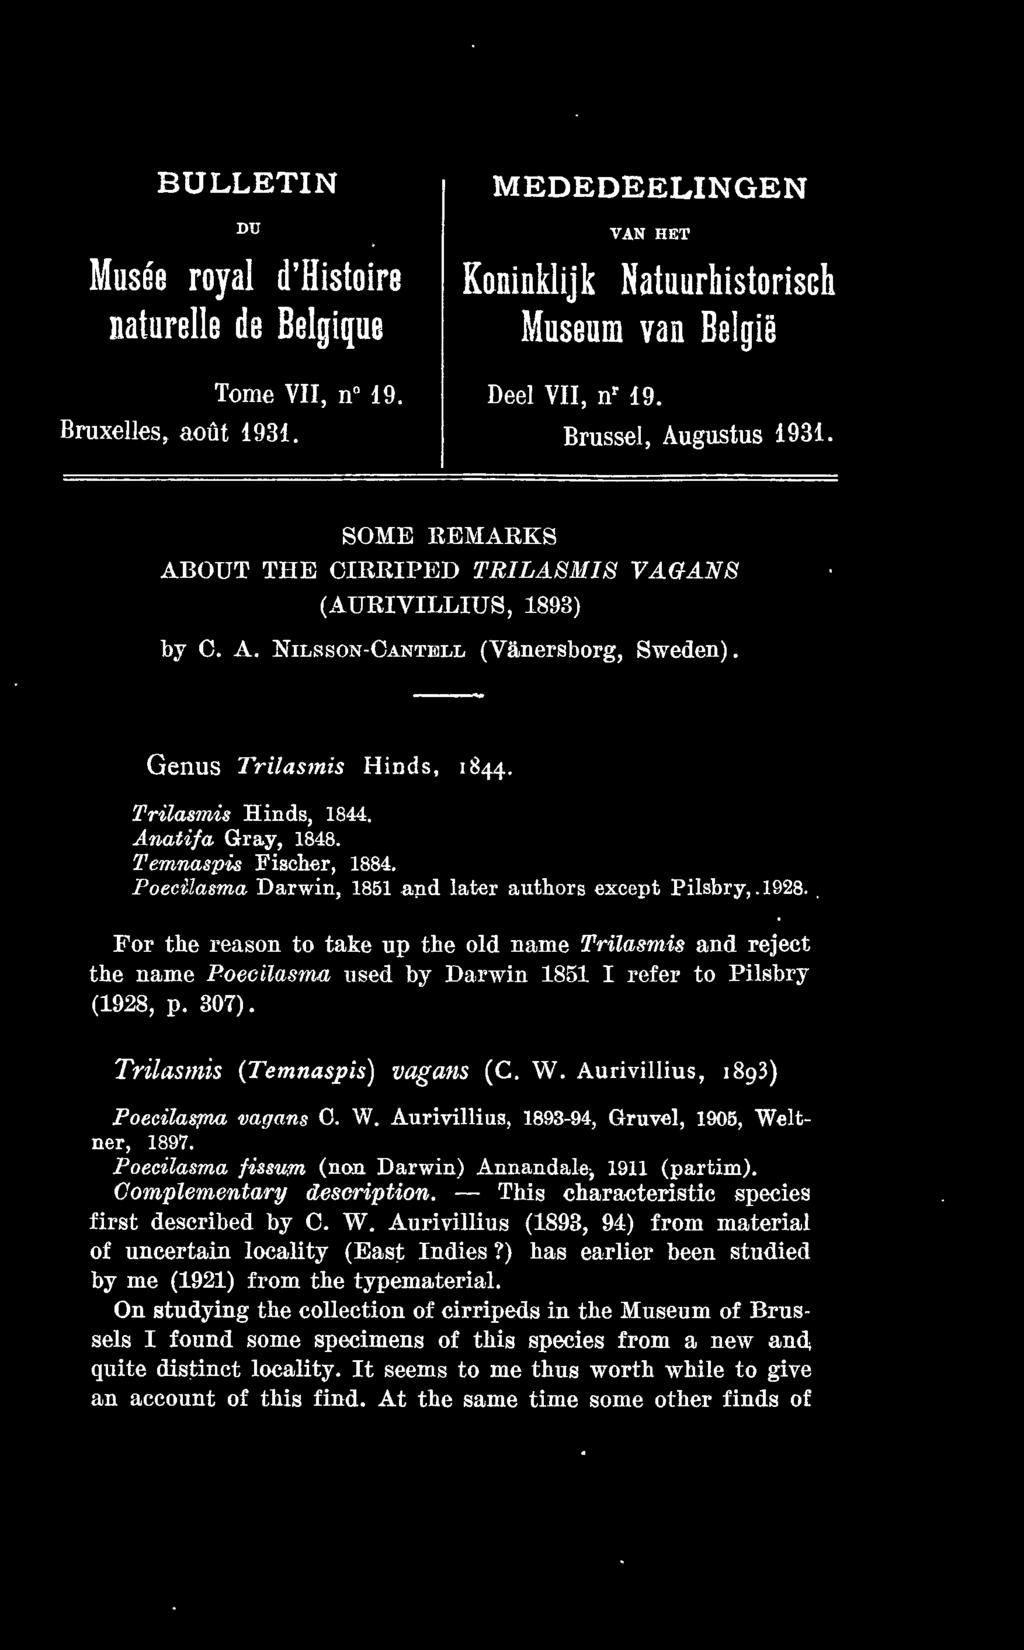 Temnaspis Fischer, 1884. Poecilasma Darwin, 1851.ap.d later authors except Pilsbry,.1928.